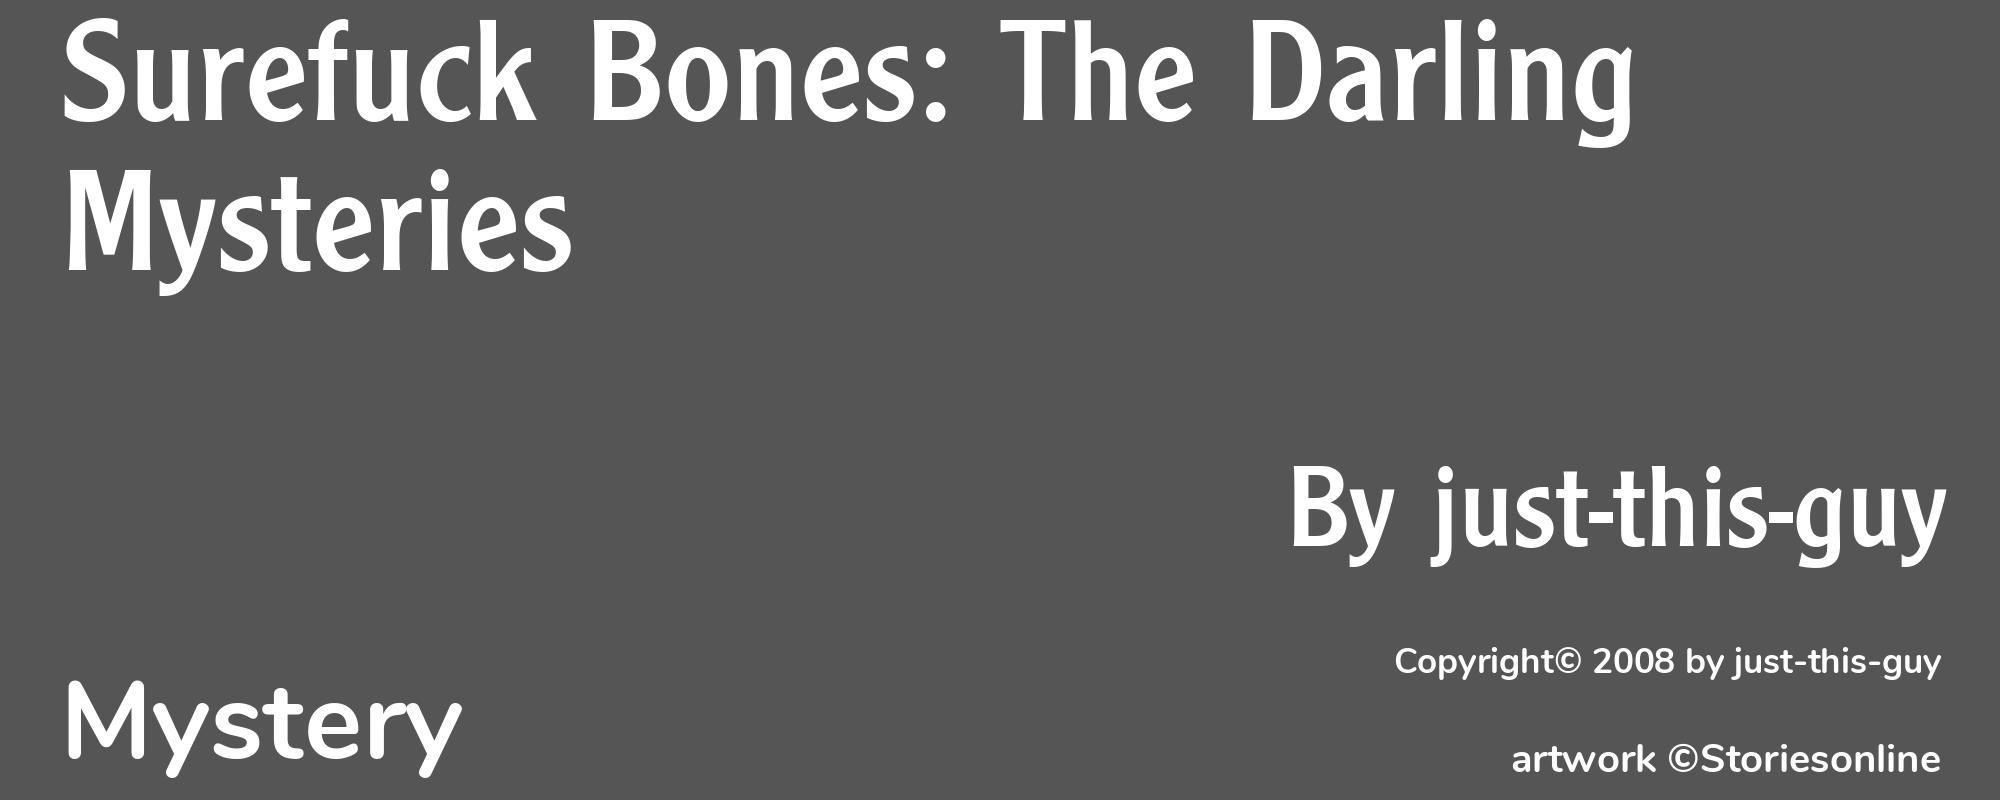 Surefuck Bones: The Darling Mysteries - Cover